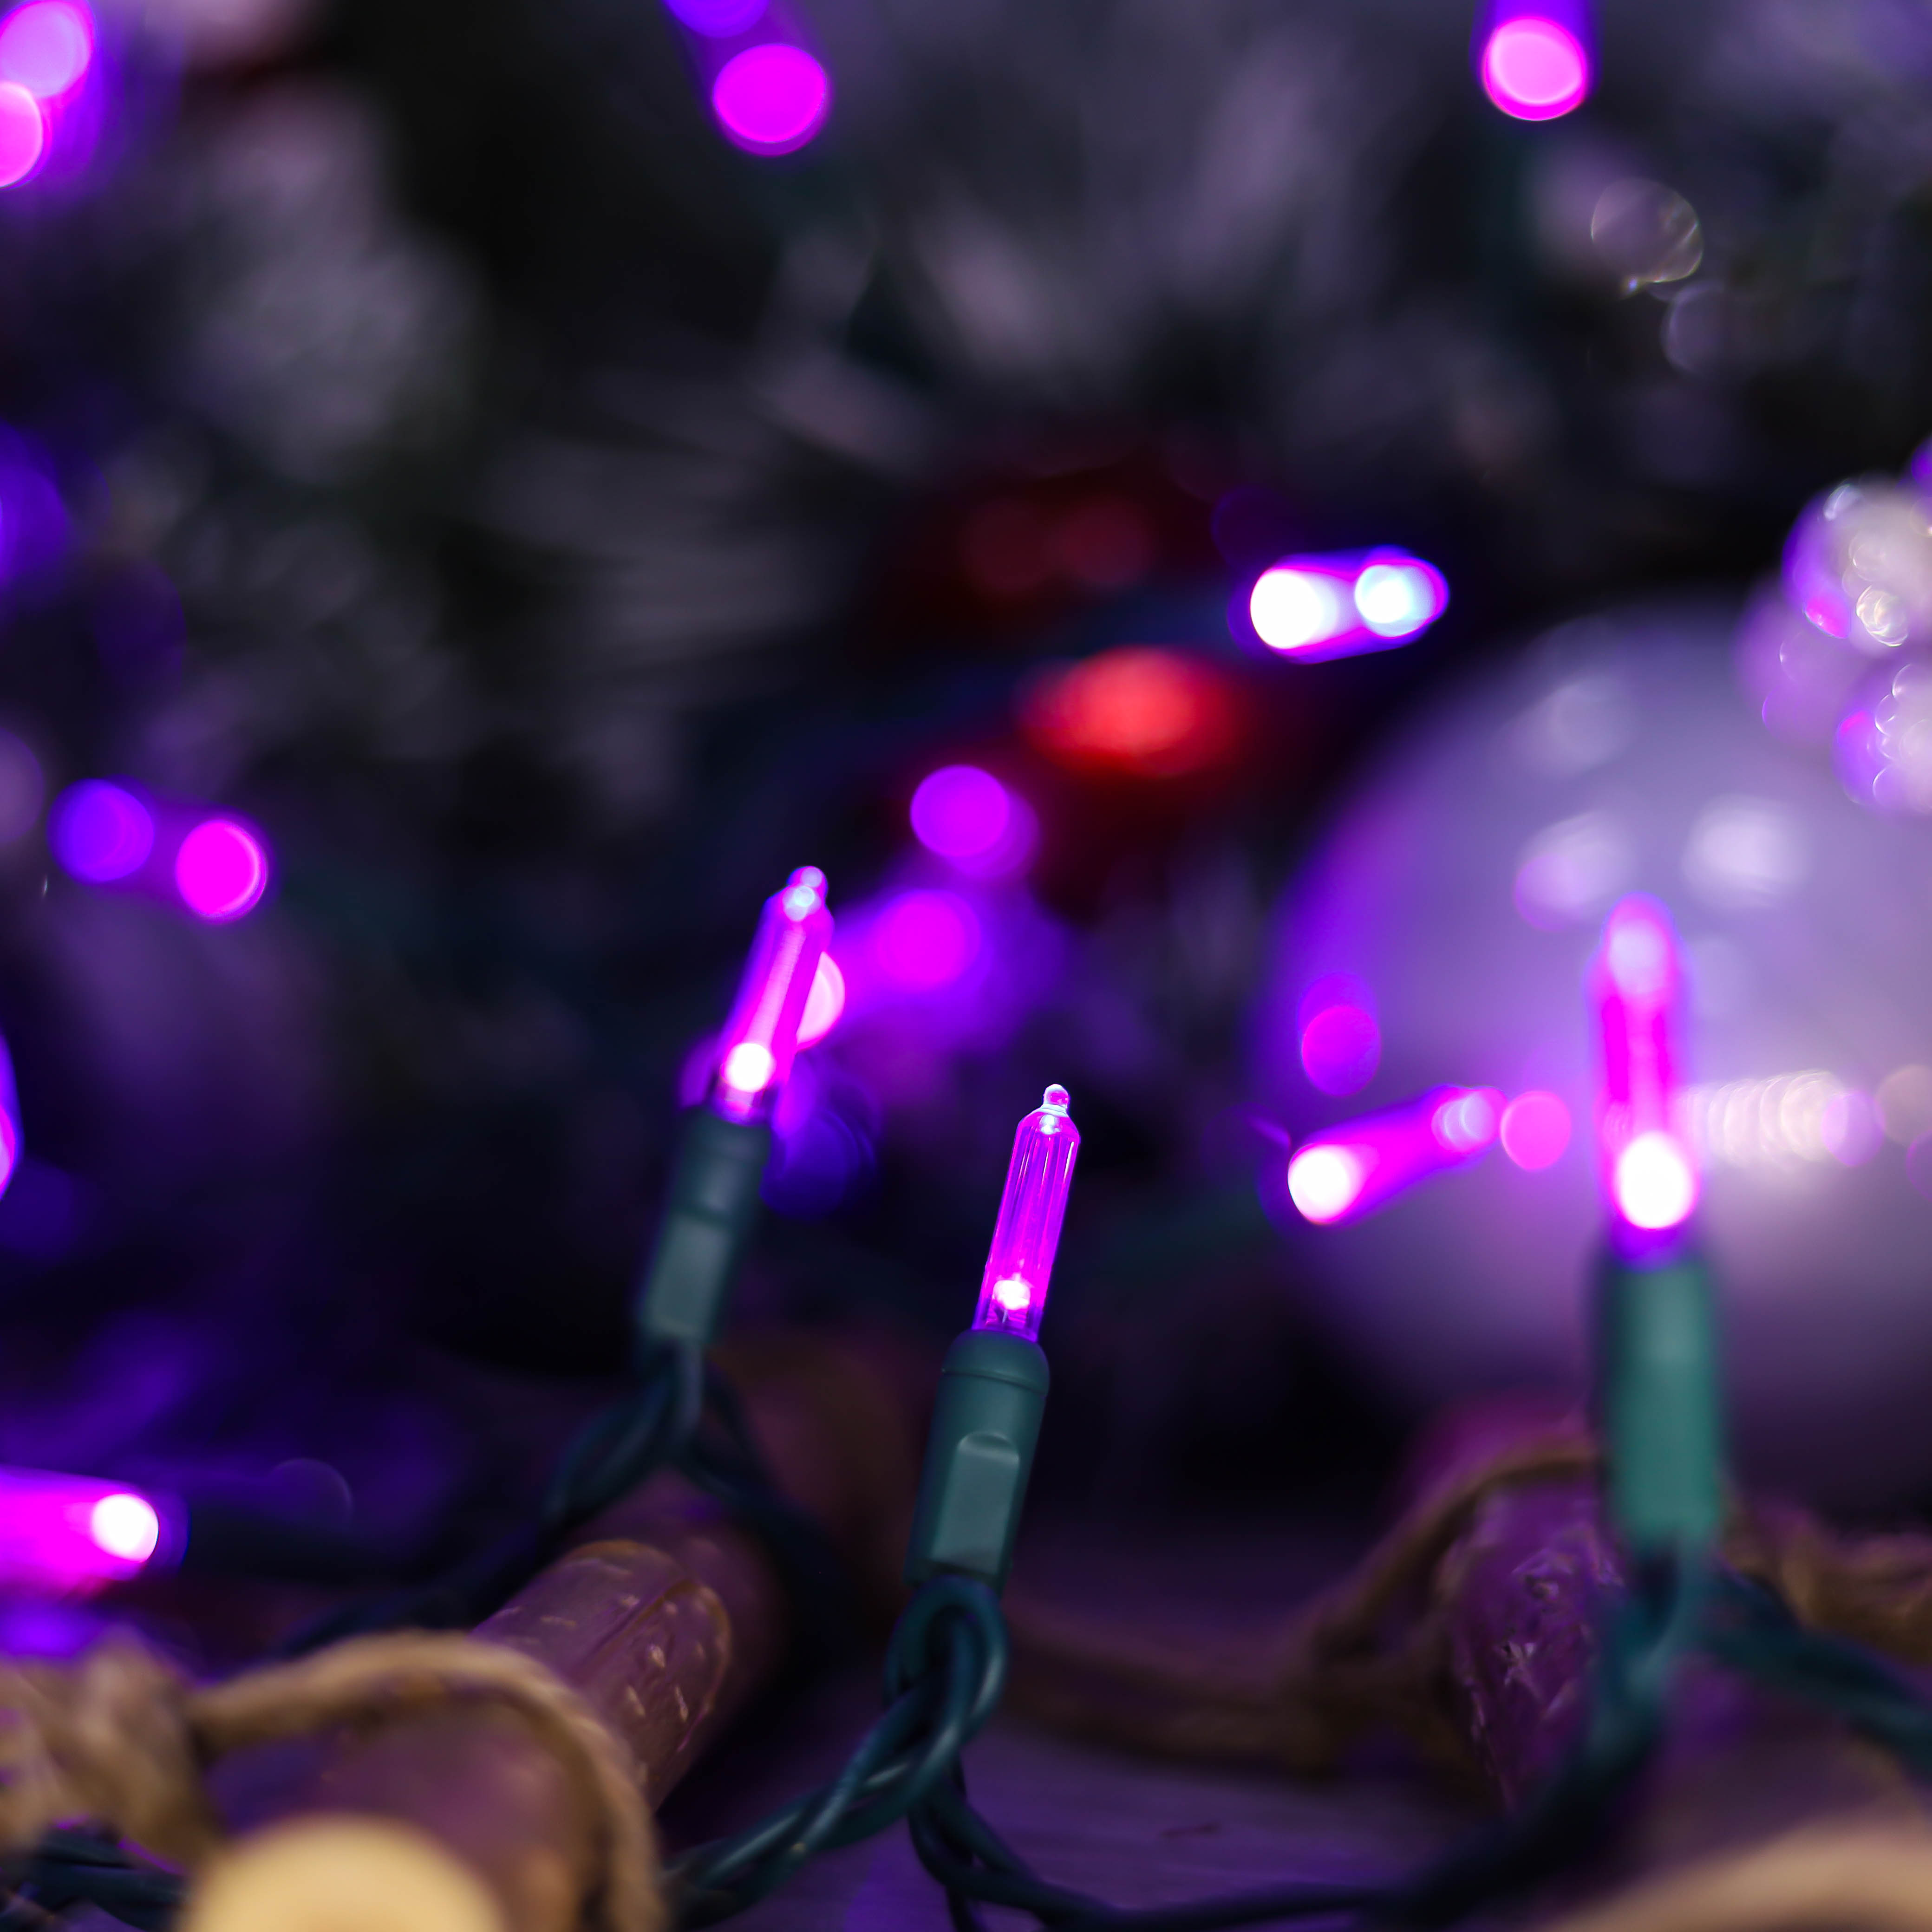 UL T5 LED String Lights Purple Christmas Light Halloween Light